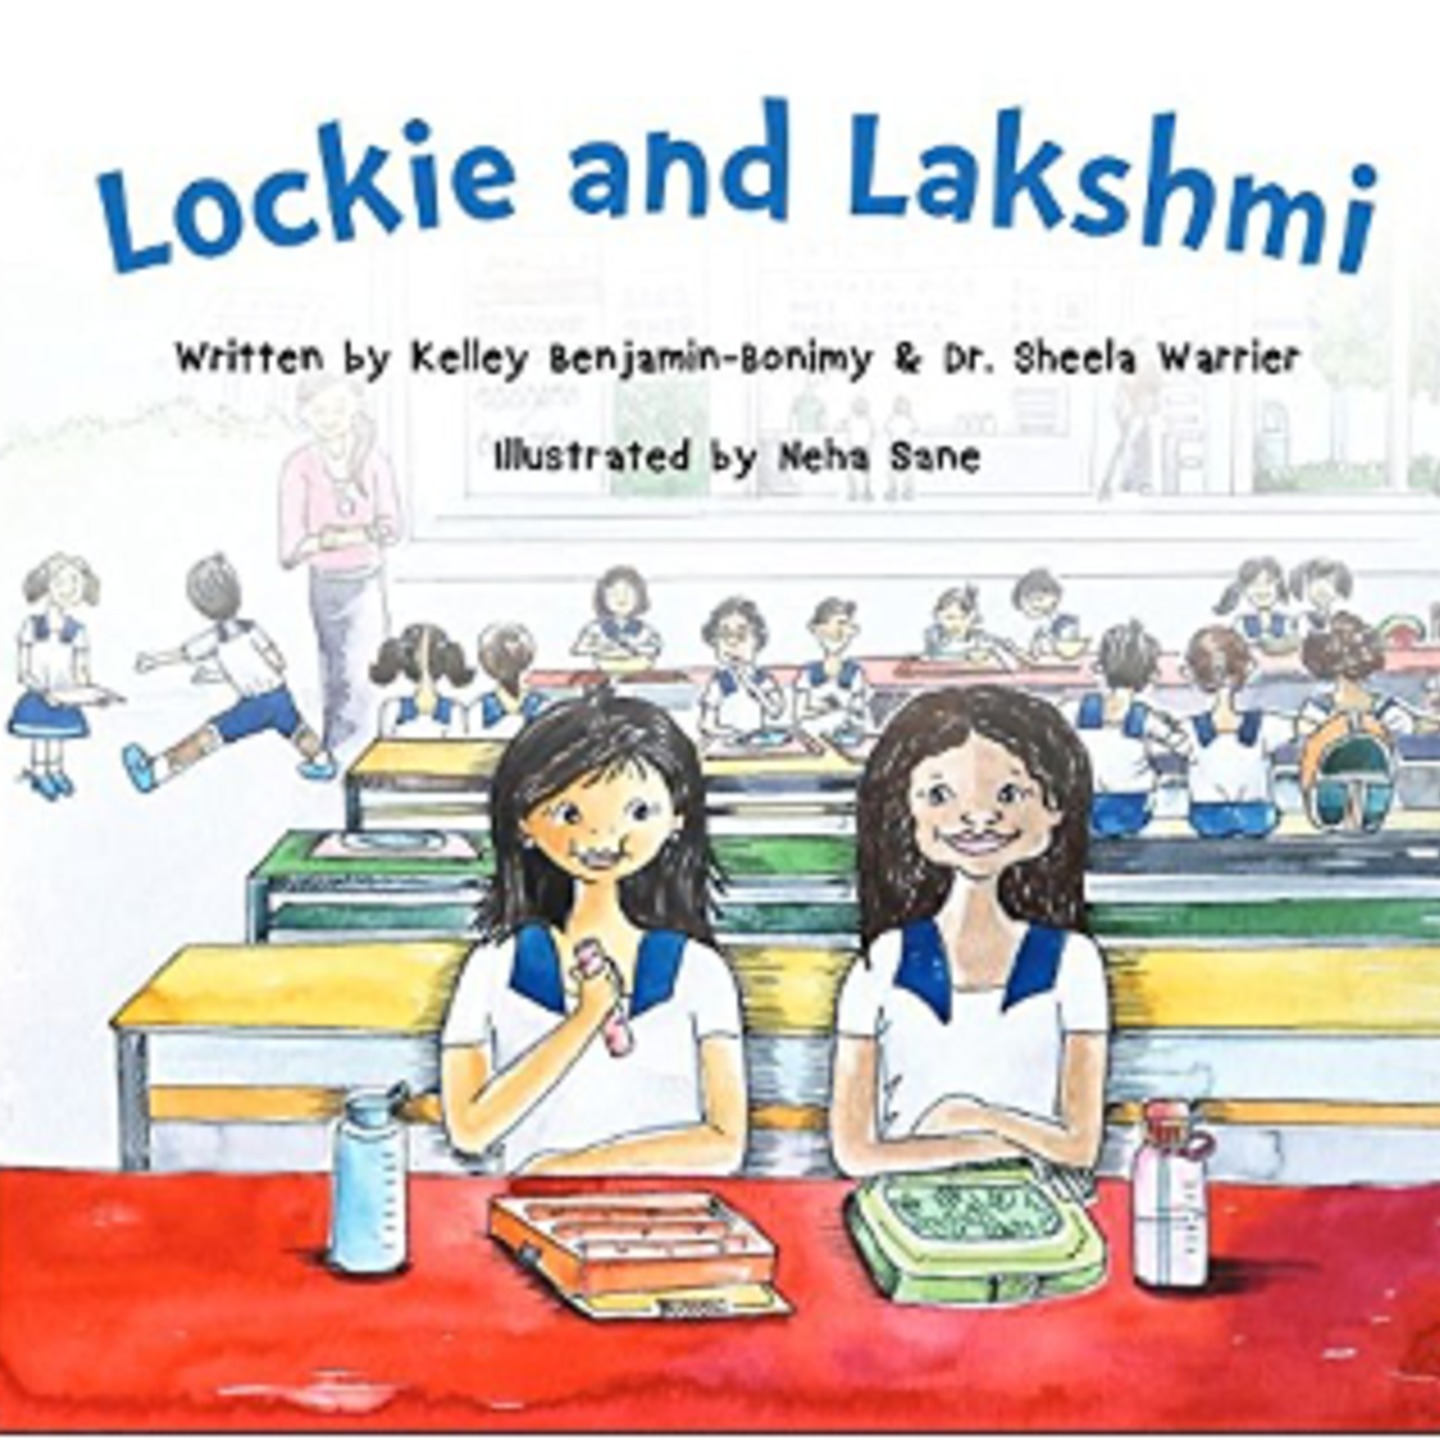 Lockie and Lakshmi by Kelley Benjamin Bonimy and Dr. Sheela Warrier